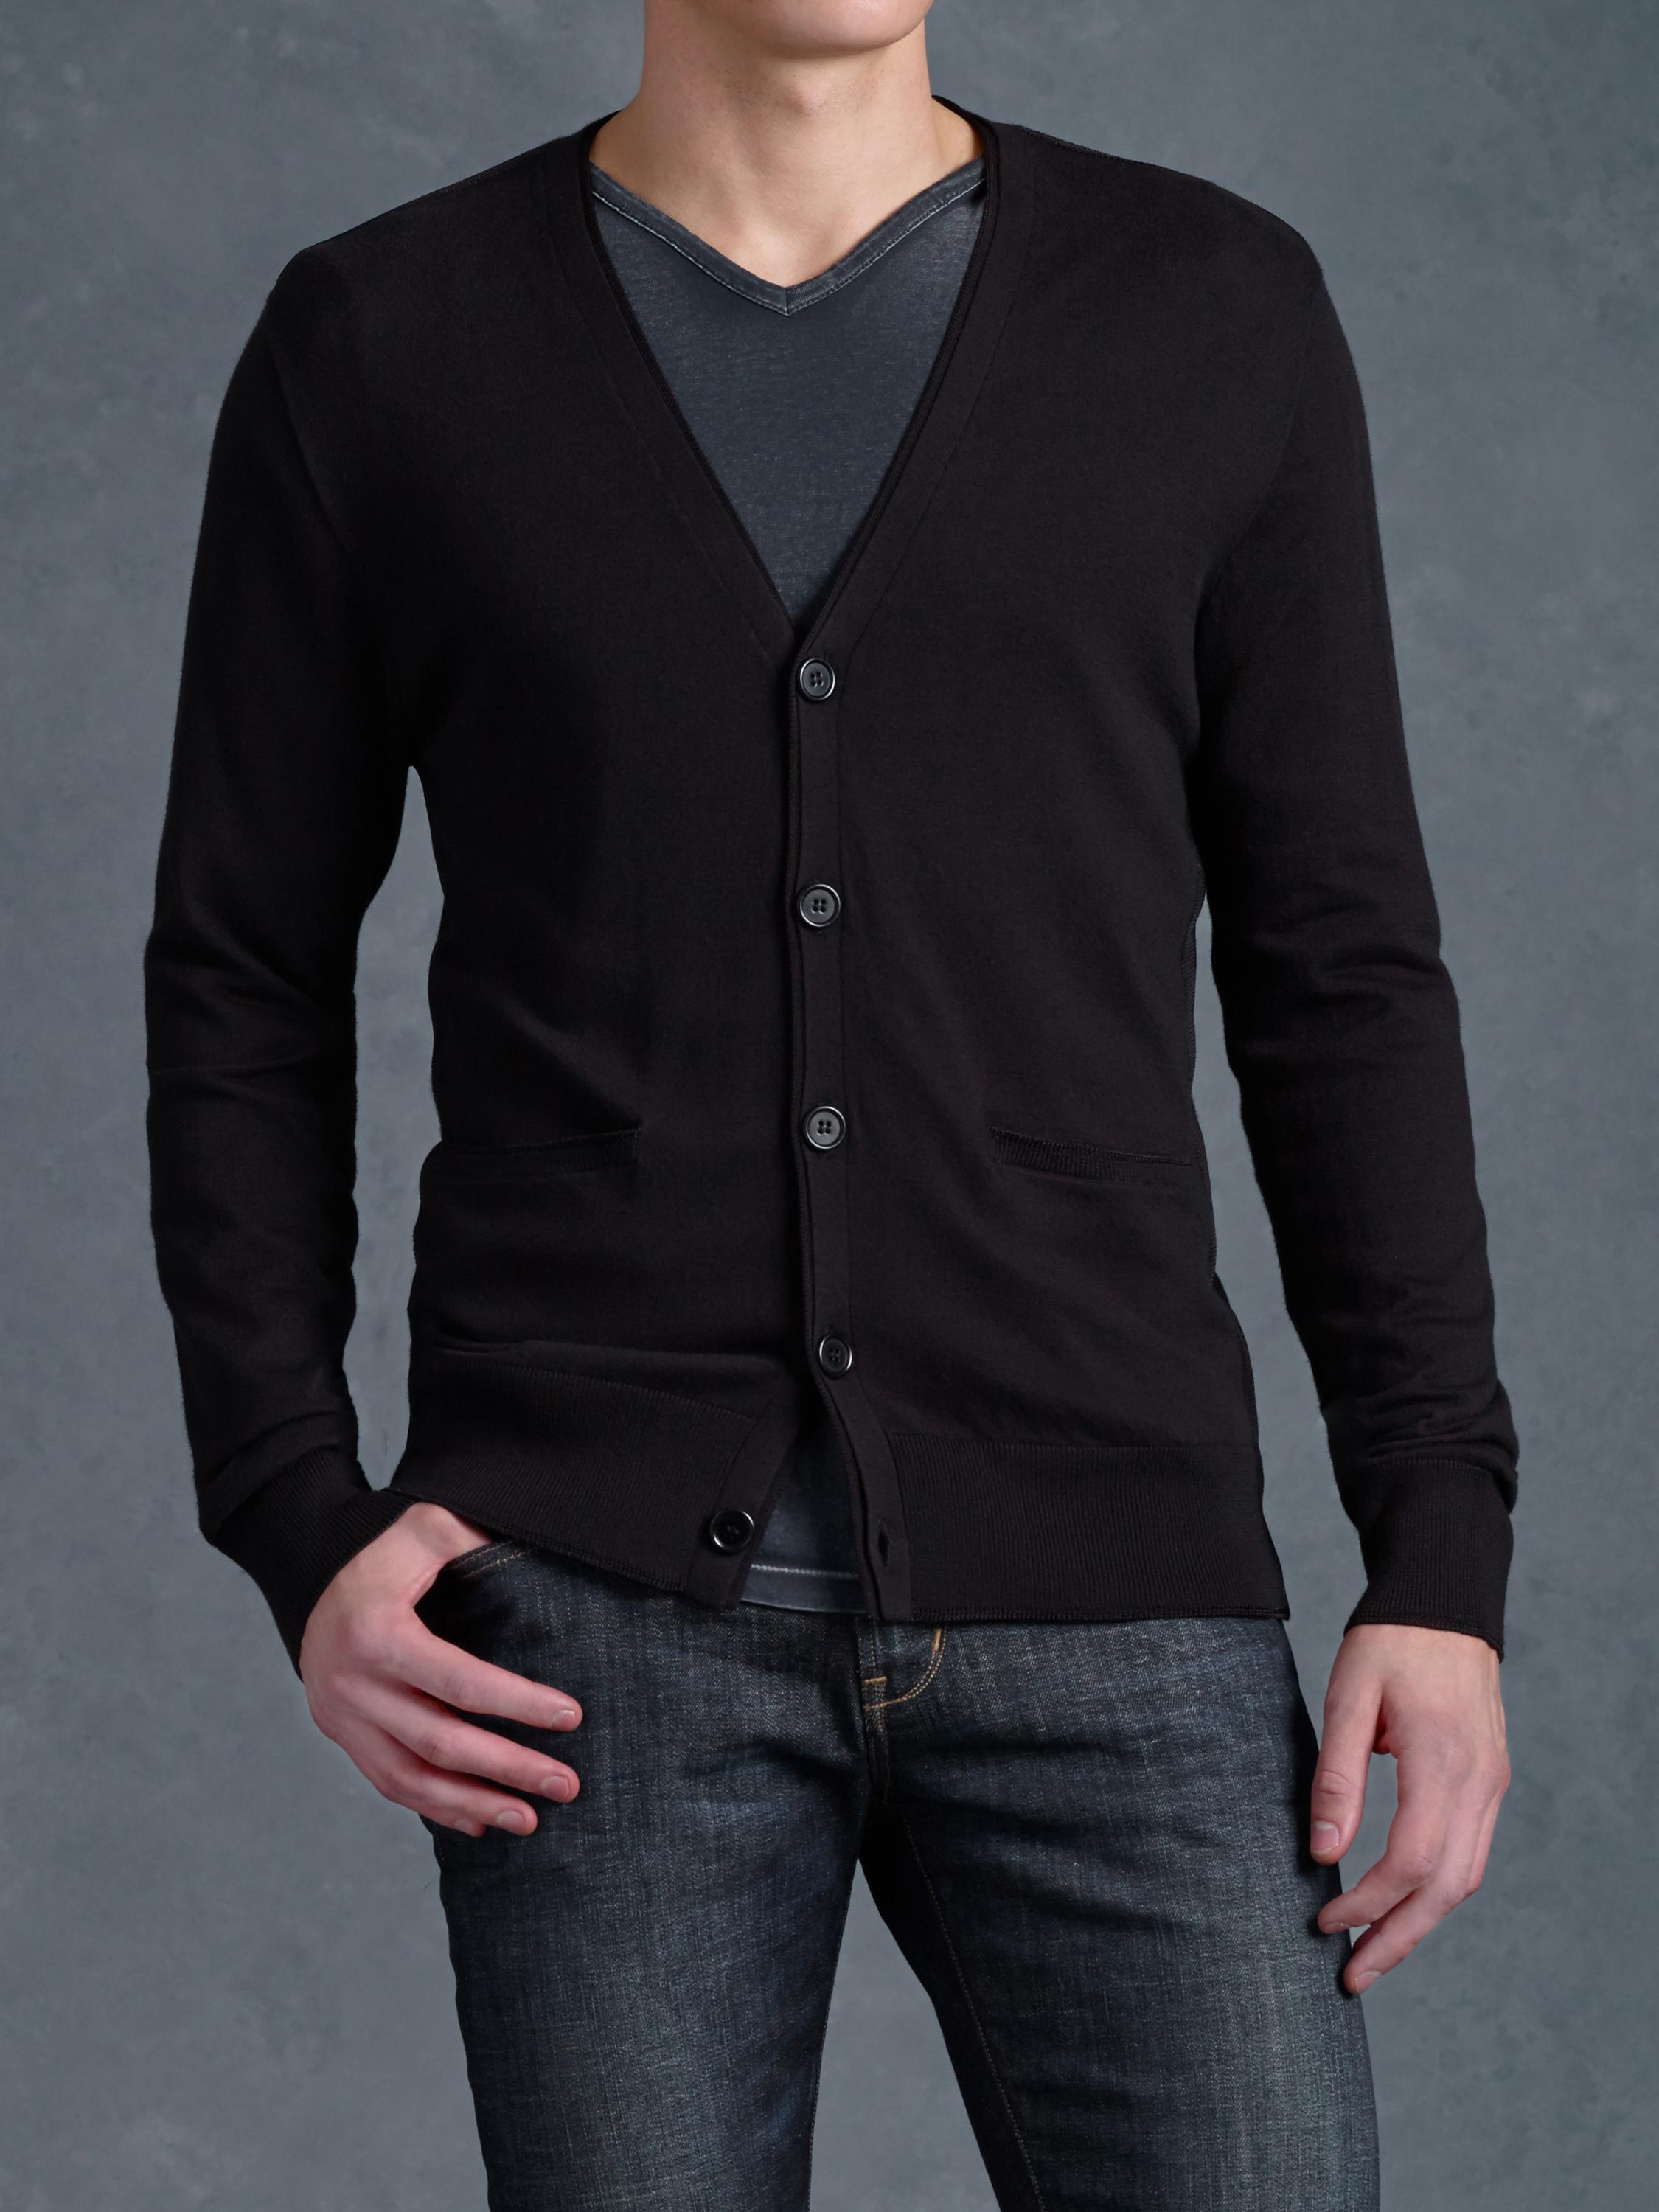 John Varvatos Button Front Cardigan Sweater in Black for Men - Lyst